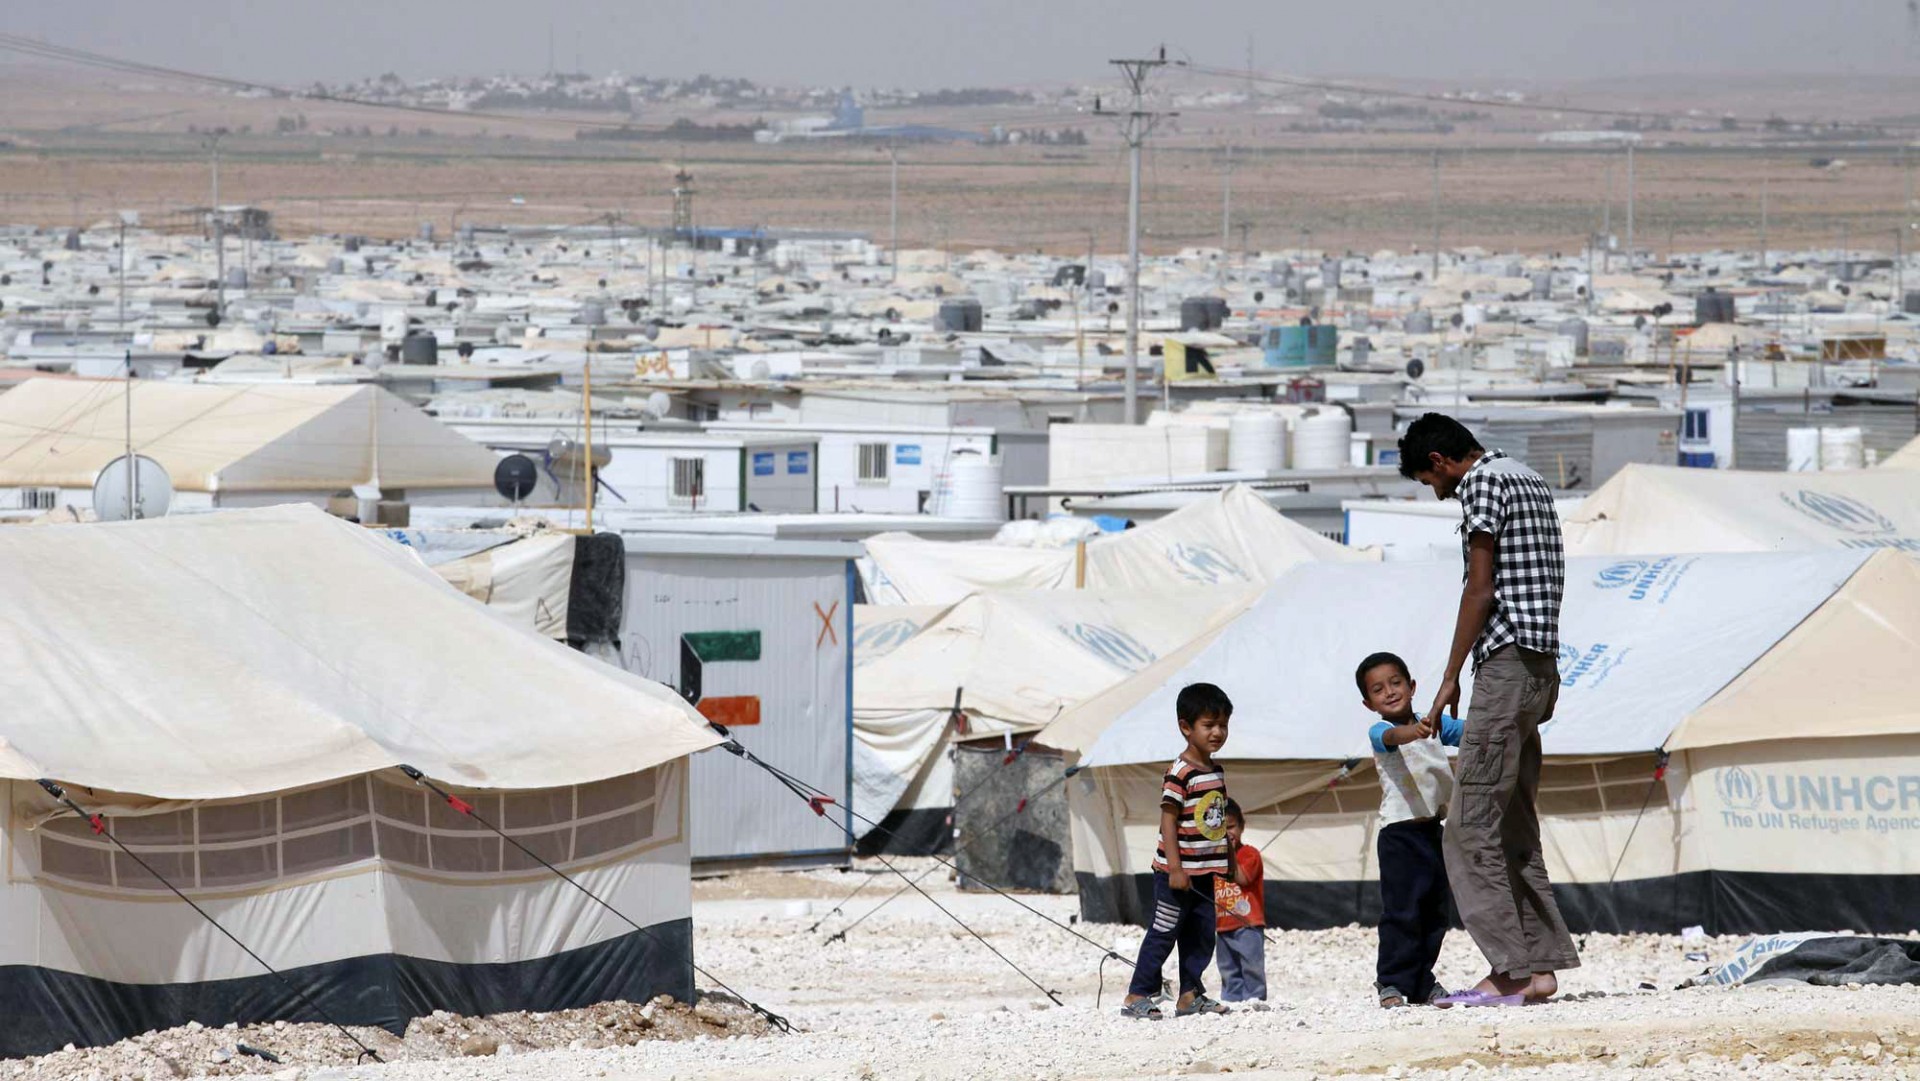 Refugee camp in Jordan